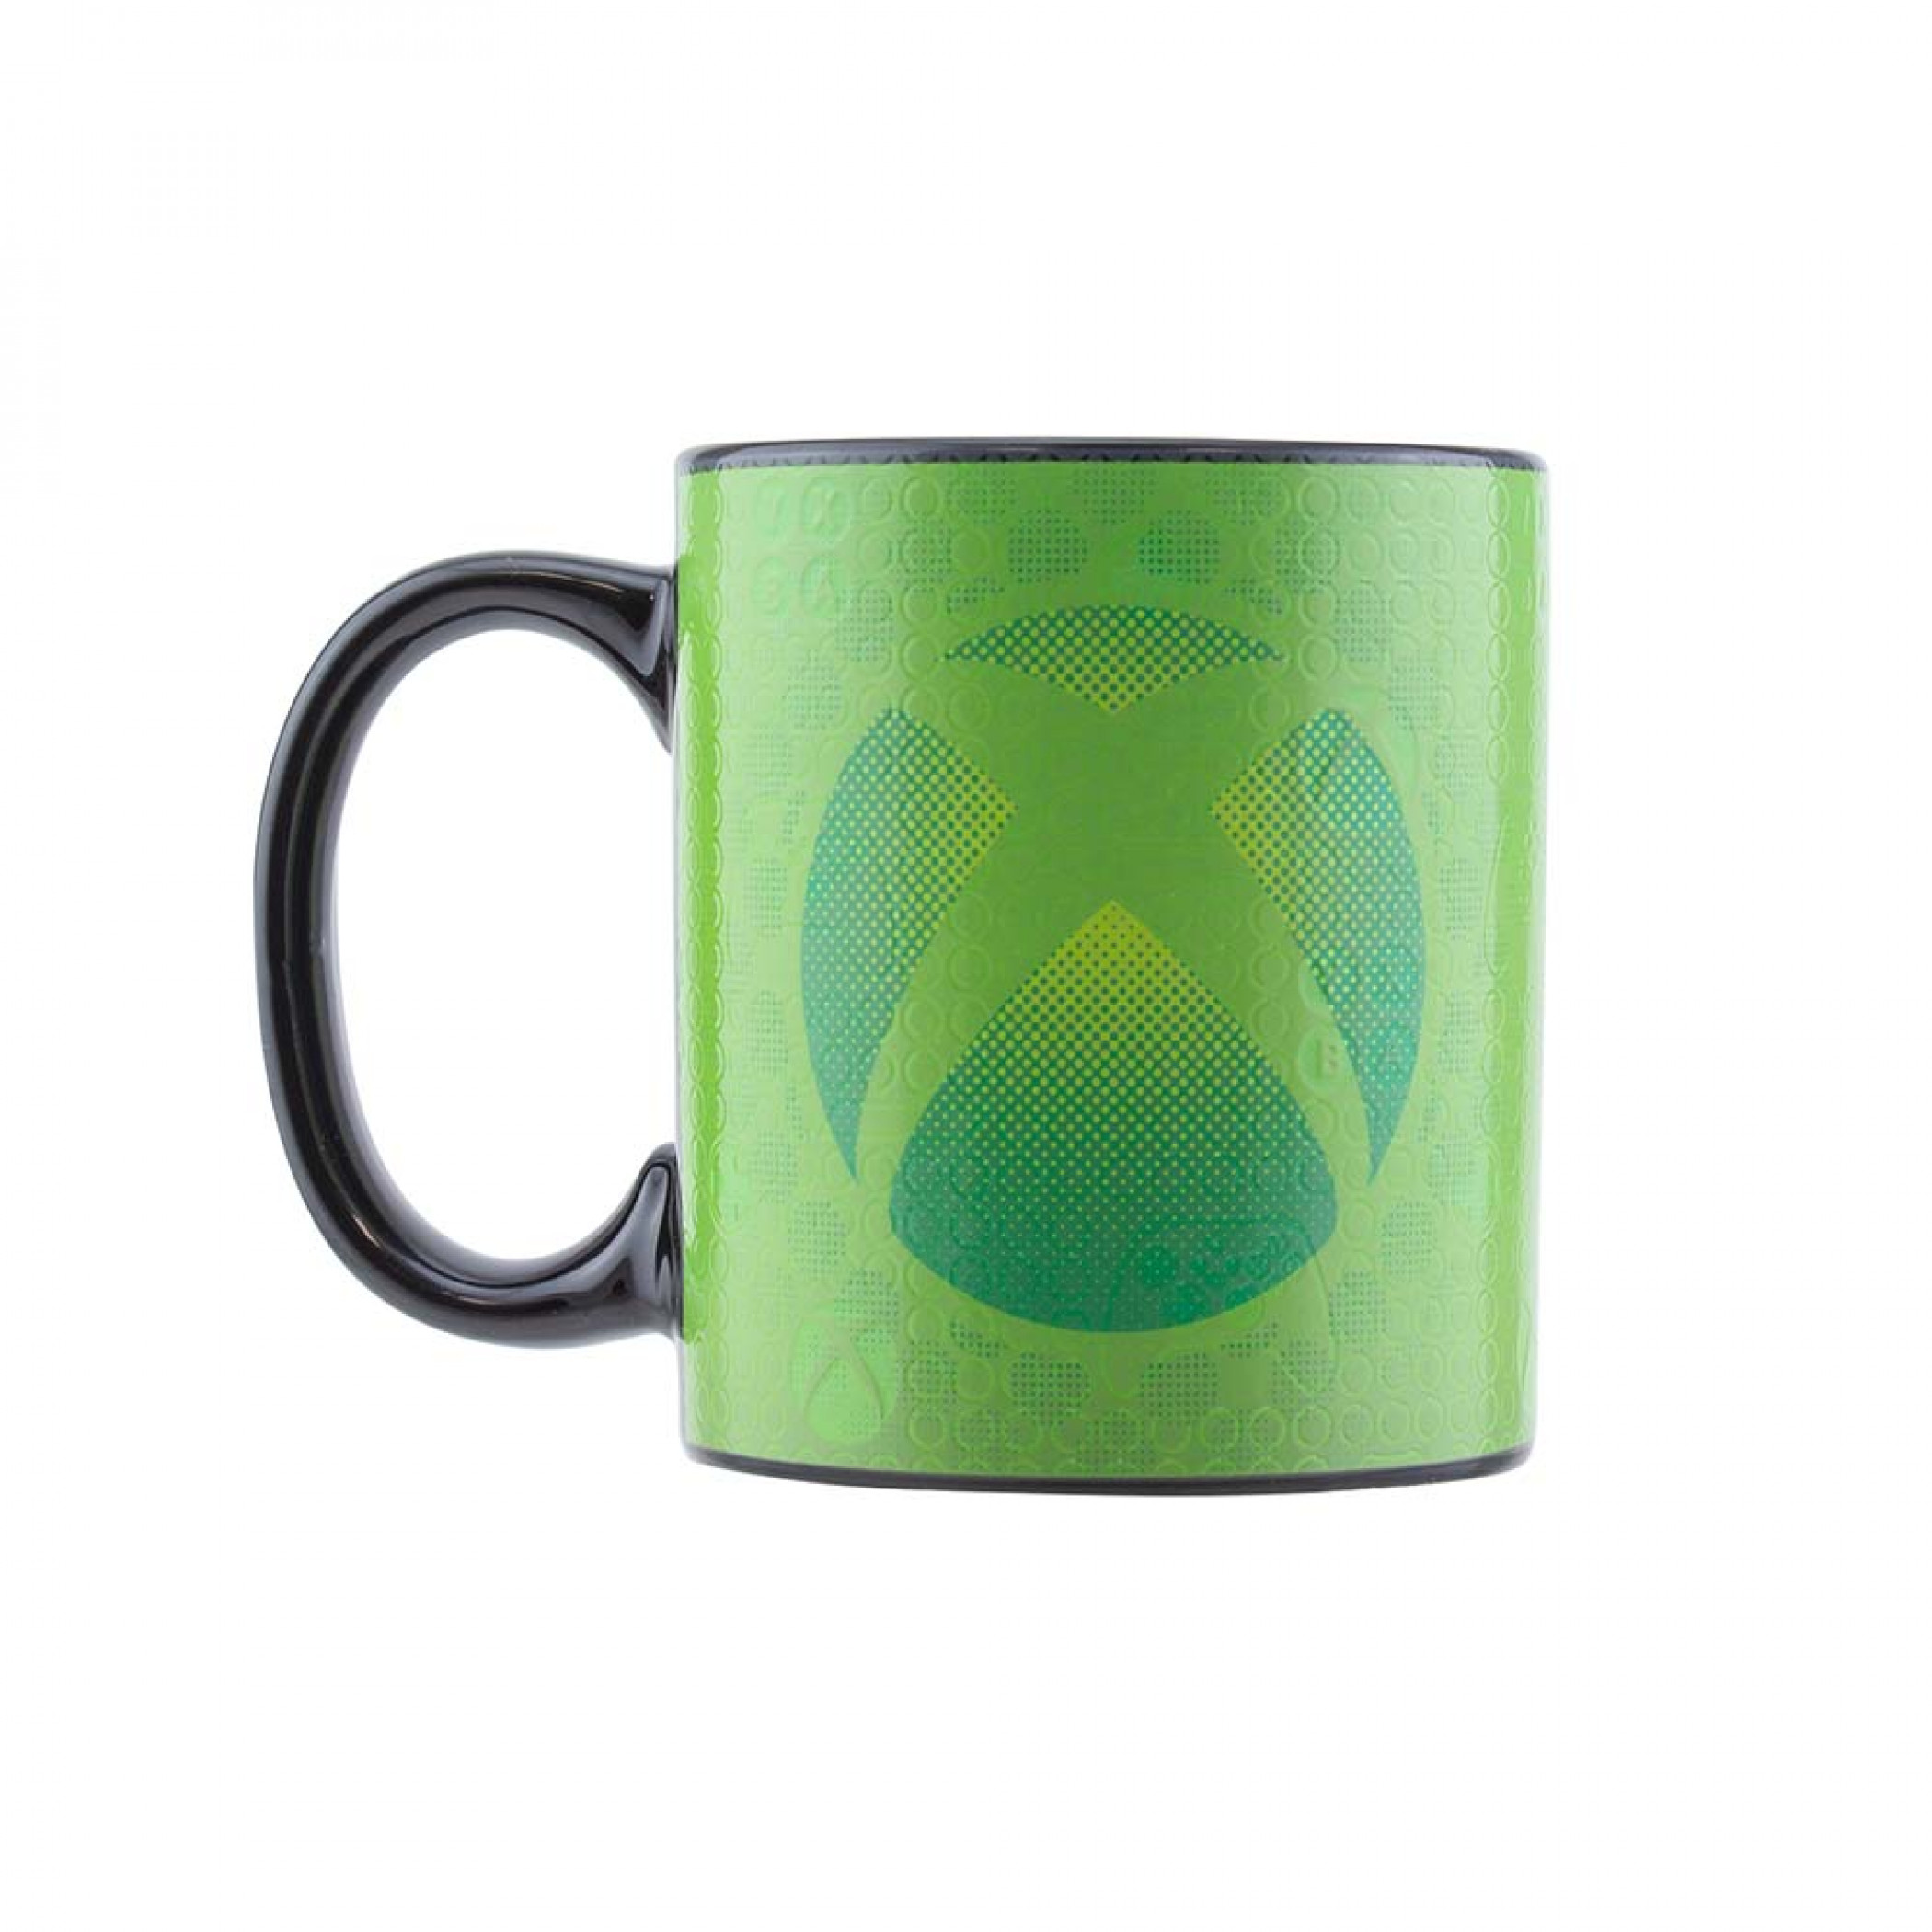 Xbox Logo and Buttons Heat Change 10oz Ceramic Mug